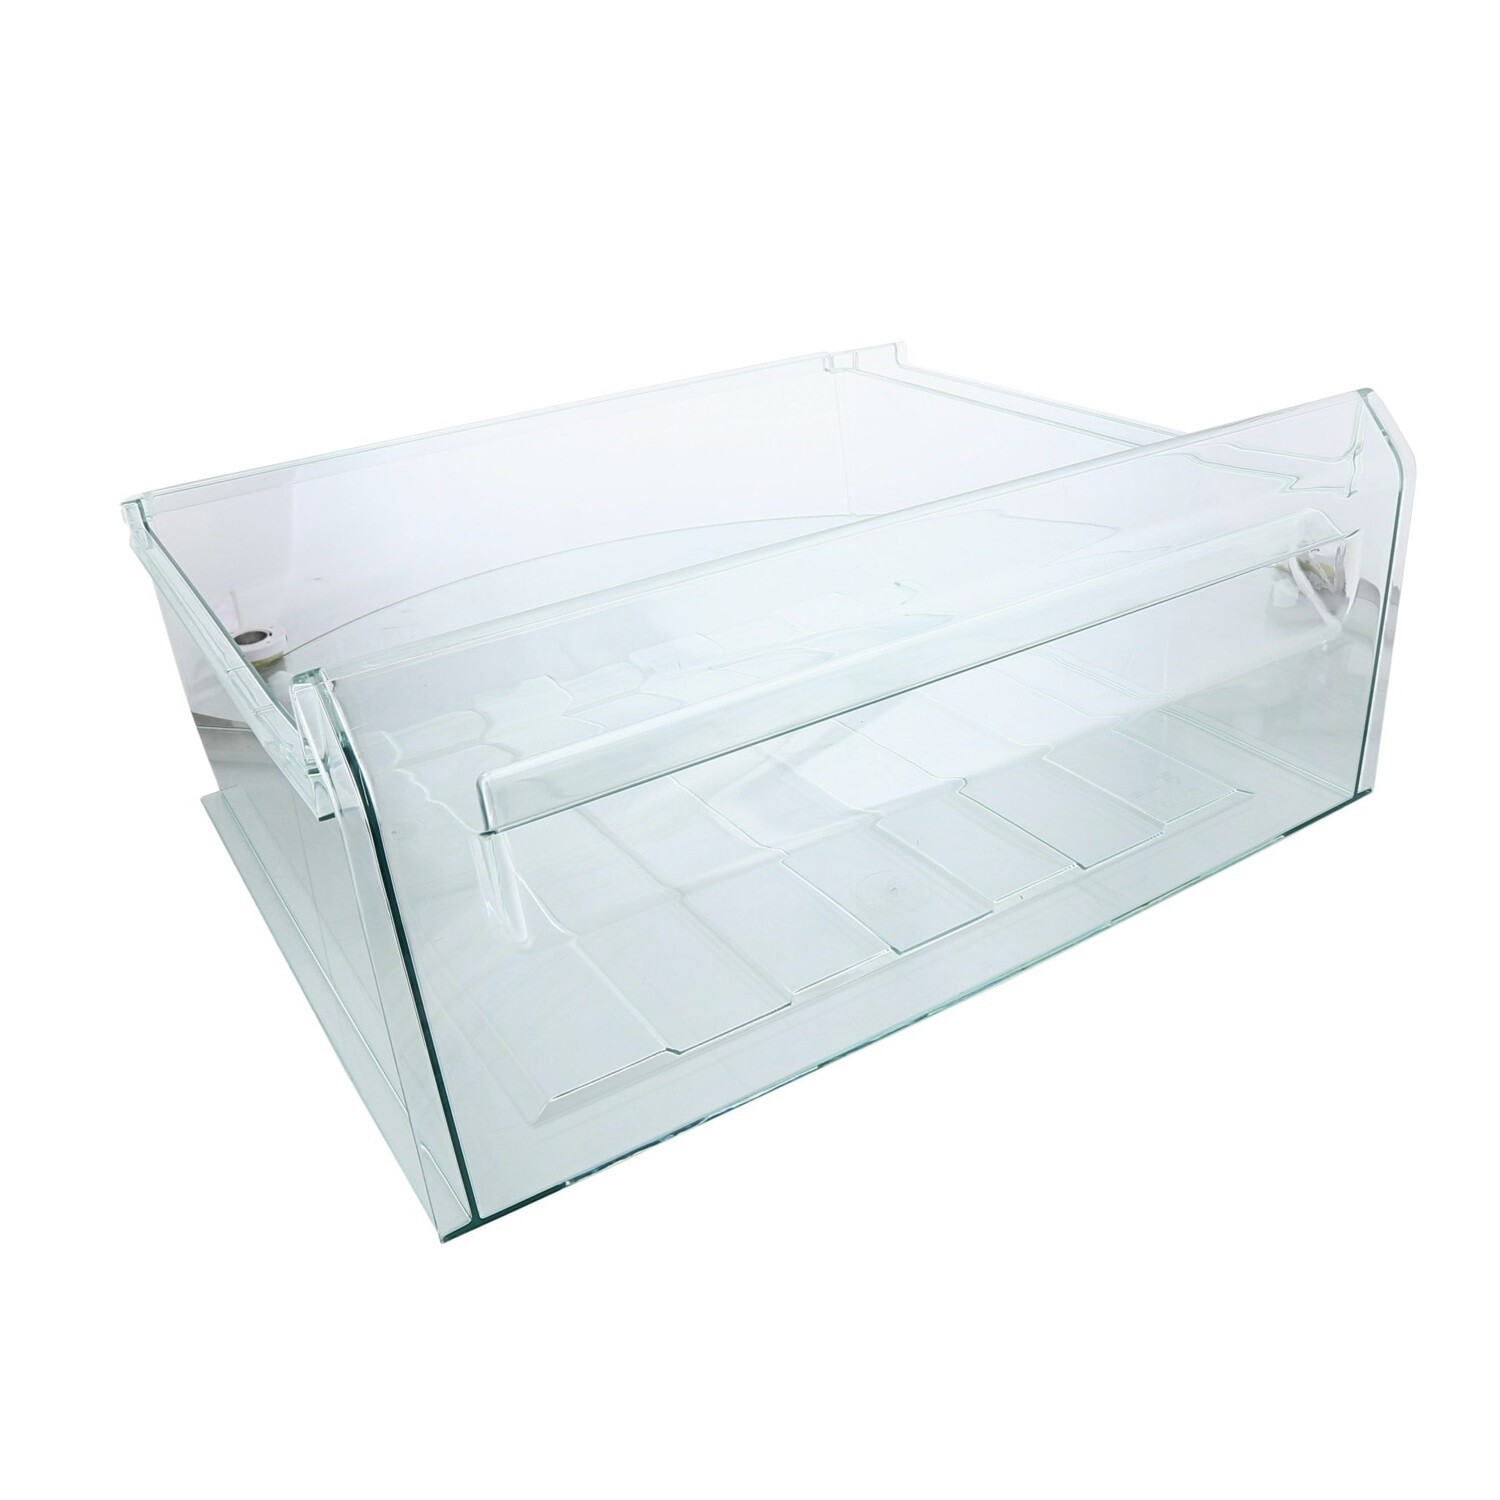 sparefixd Top or Middle Freezer Drawer to fit AEG Fridge Freezer 2247137157 